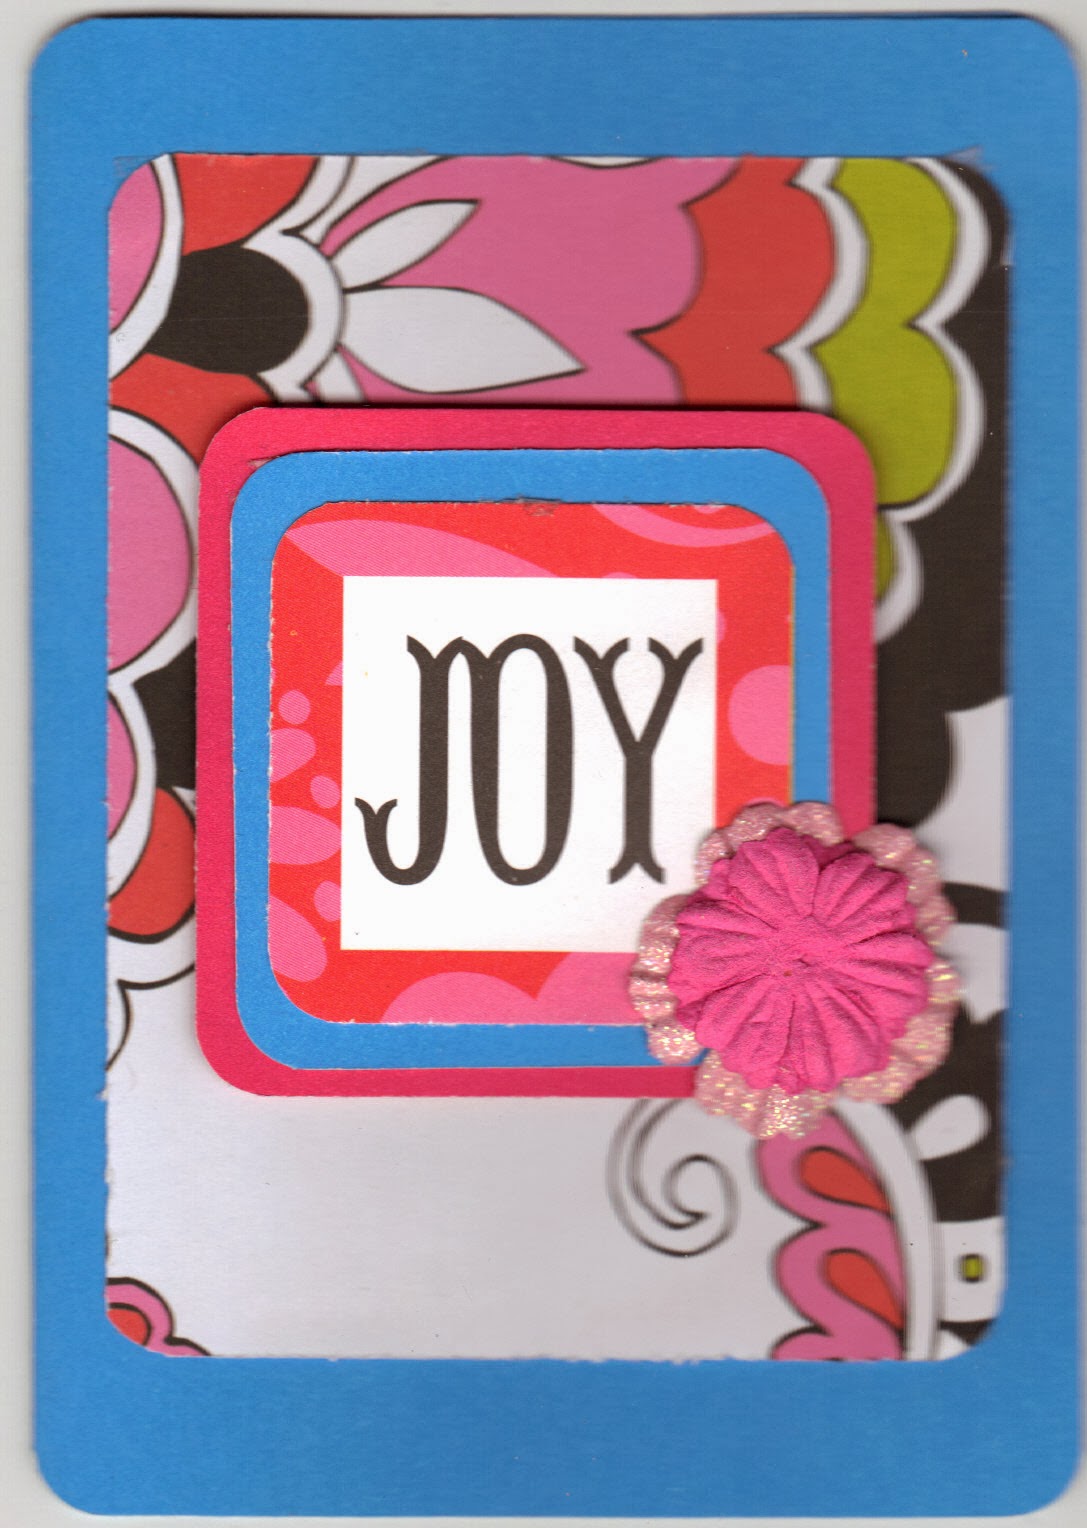 https://www.craftfoxes.com/shop/bearyamazing-s-shop-joy-blue-flow-handmade-card#